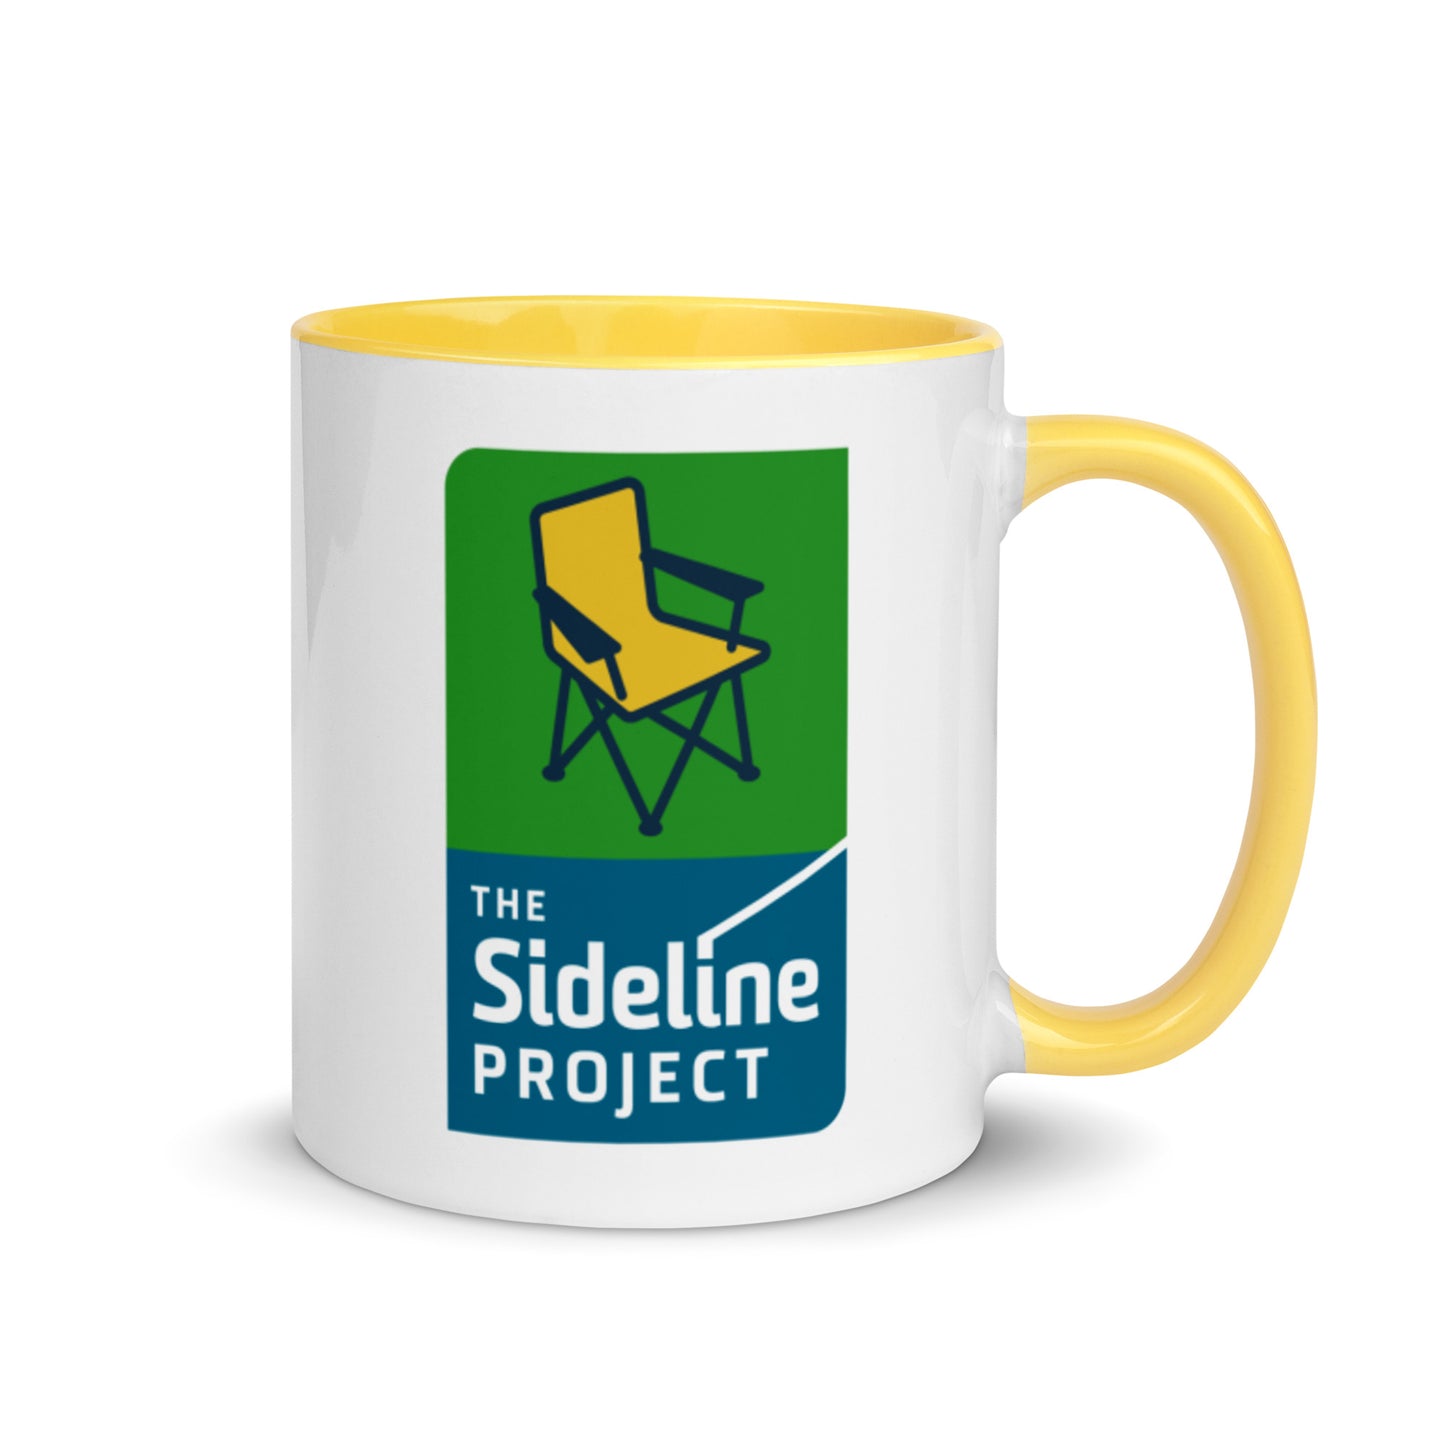 The Sideline Project Mug